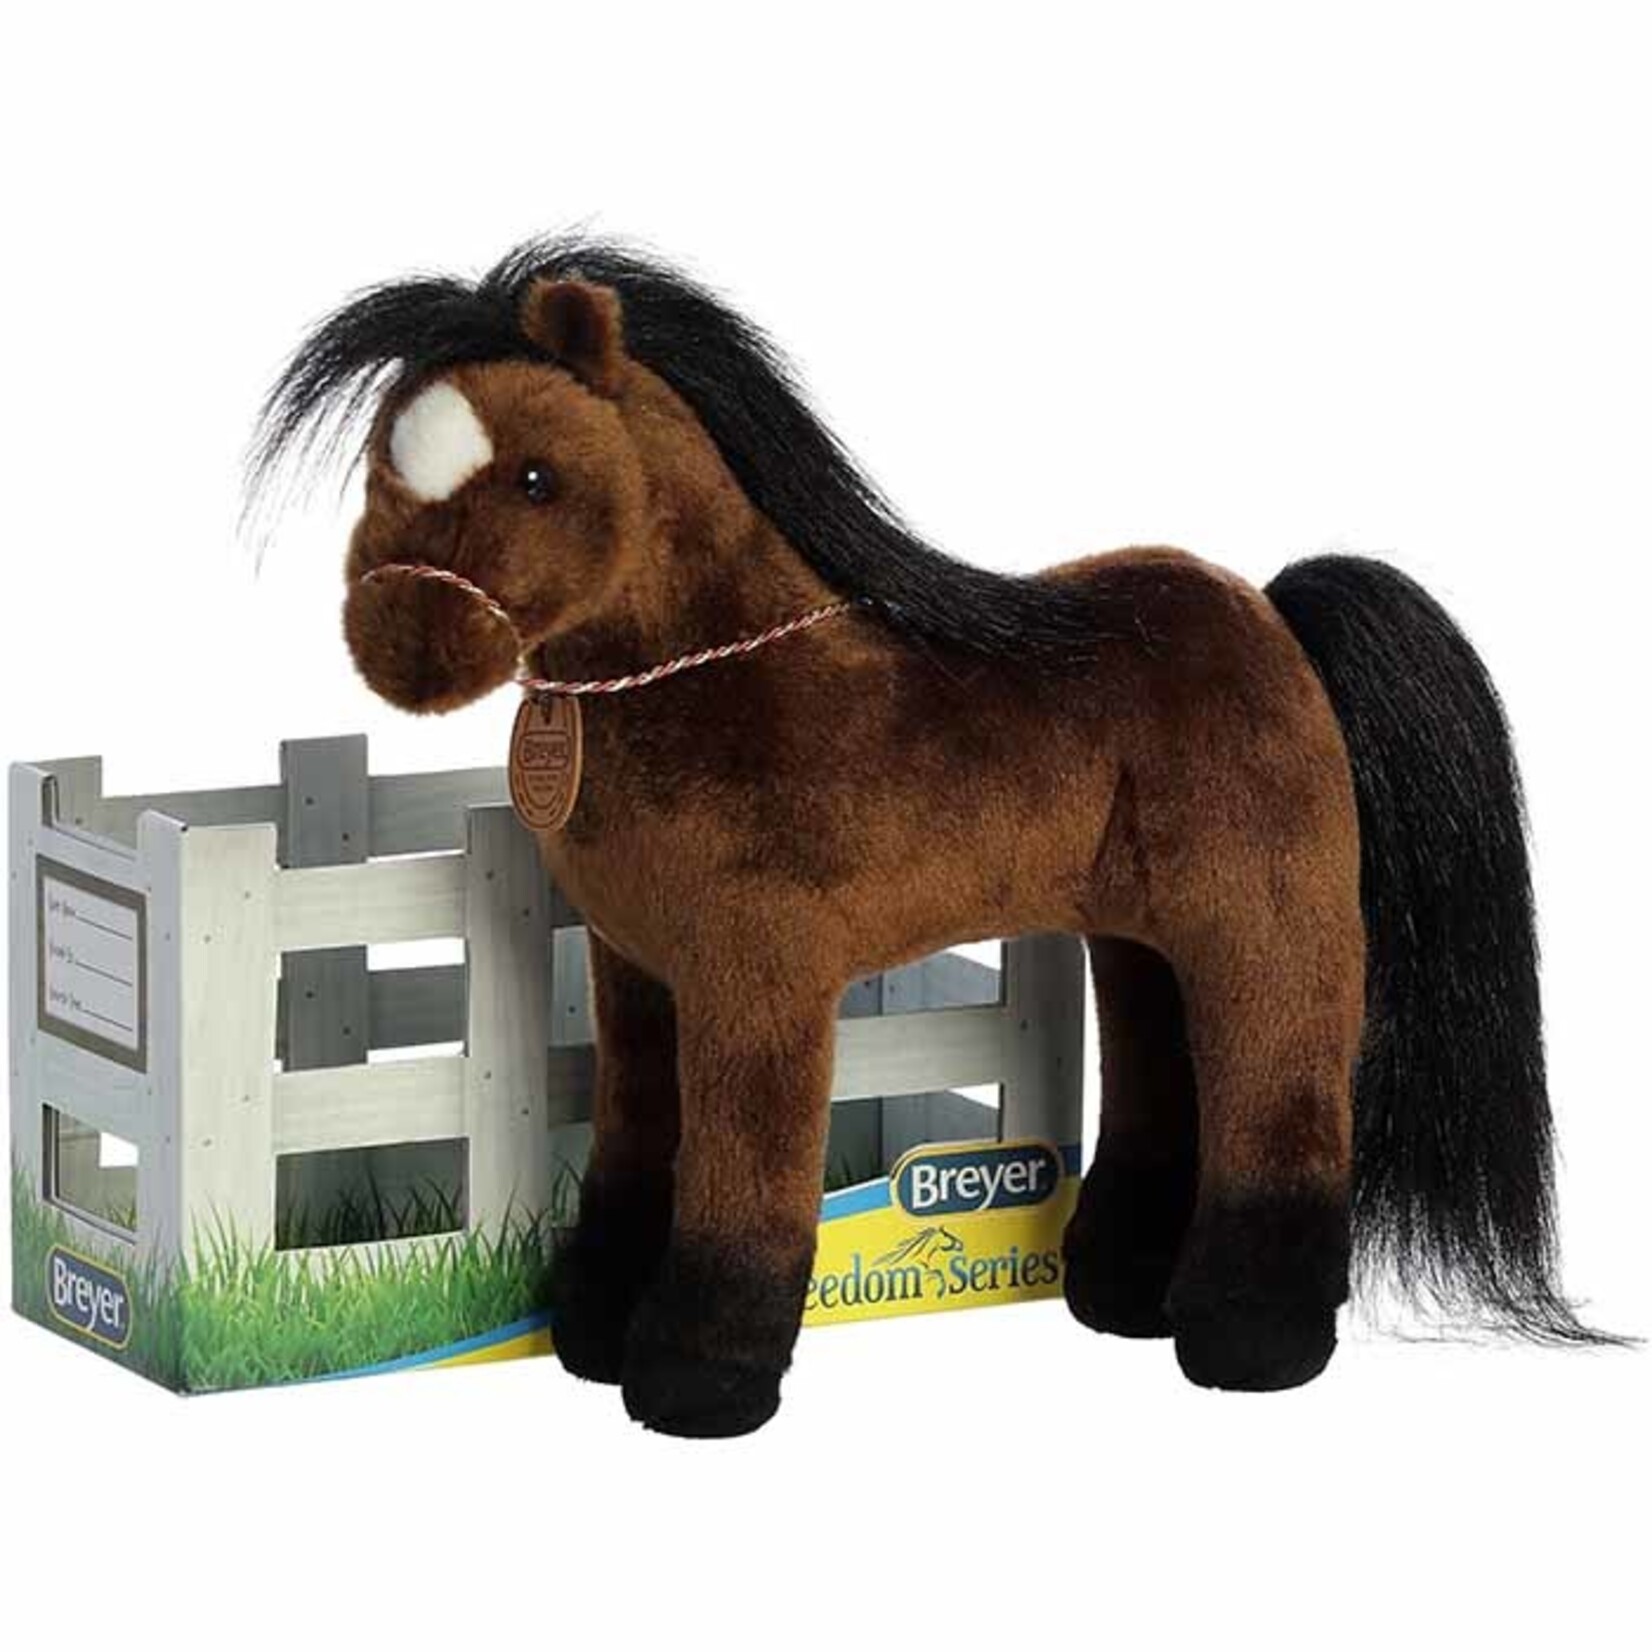 13" Breyer Plush Horse in Corral